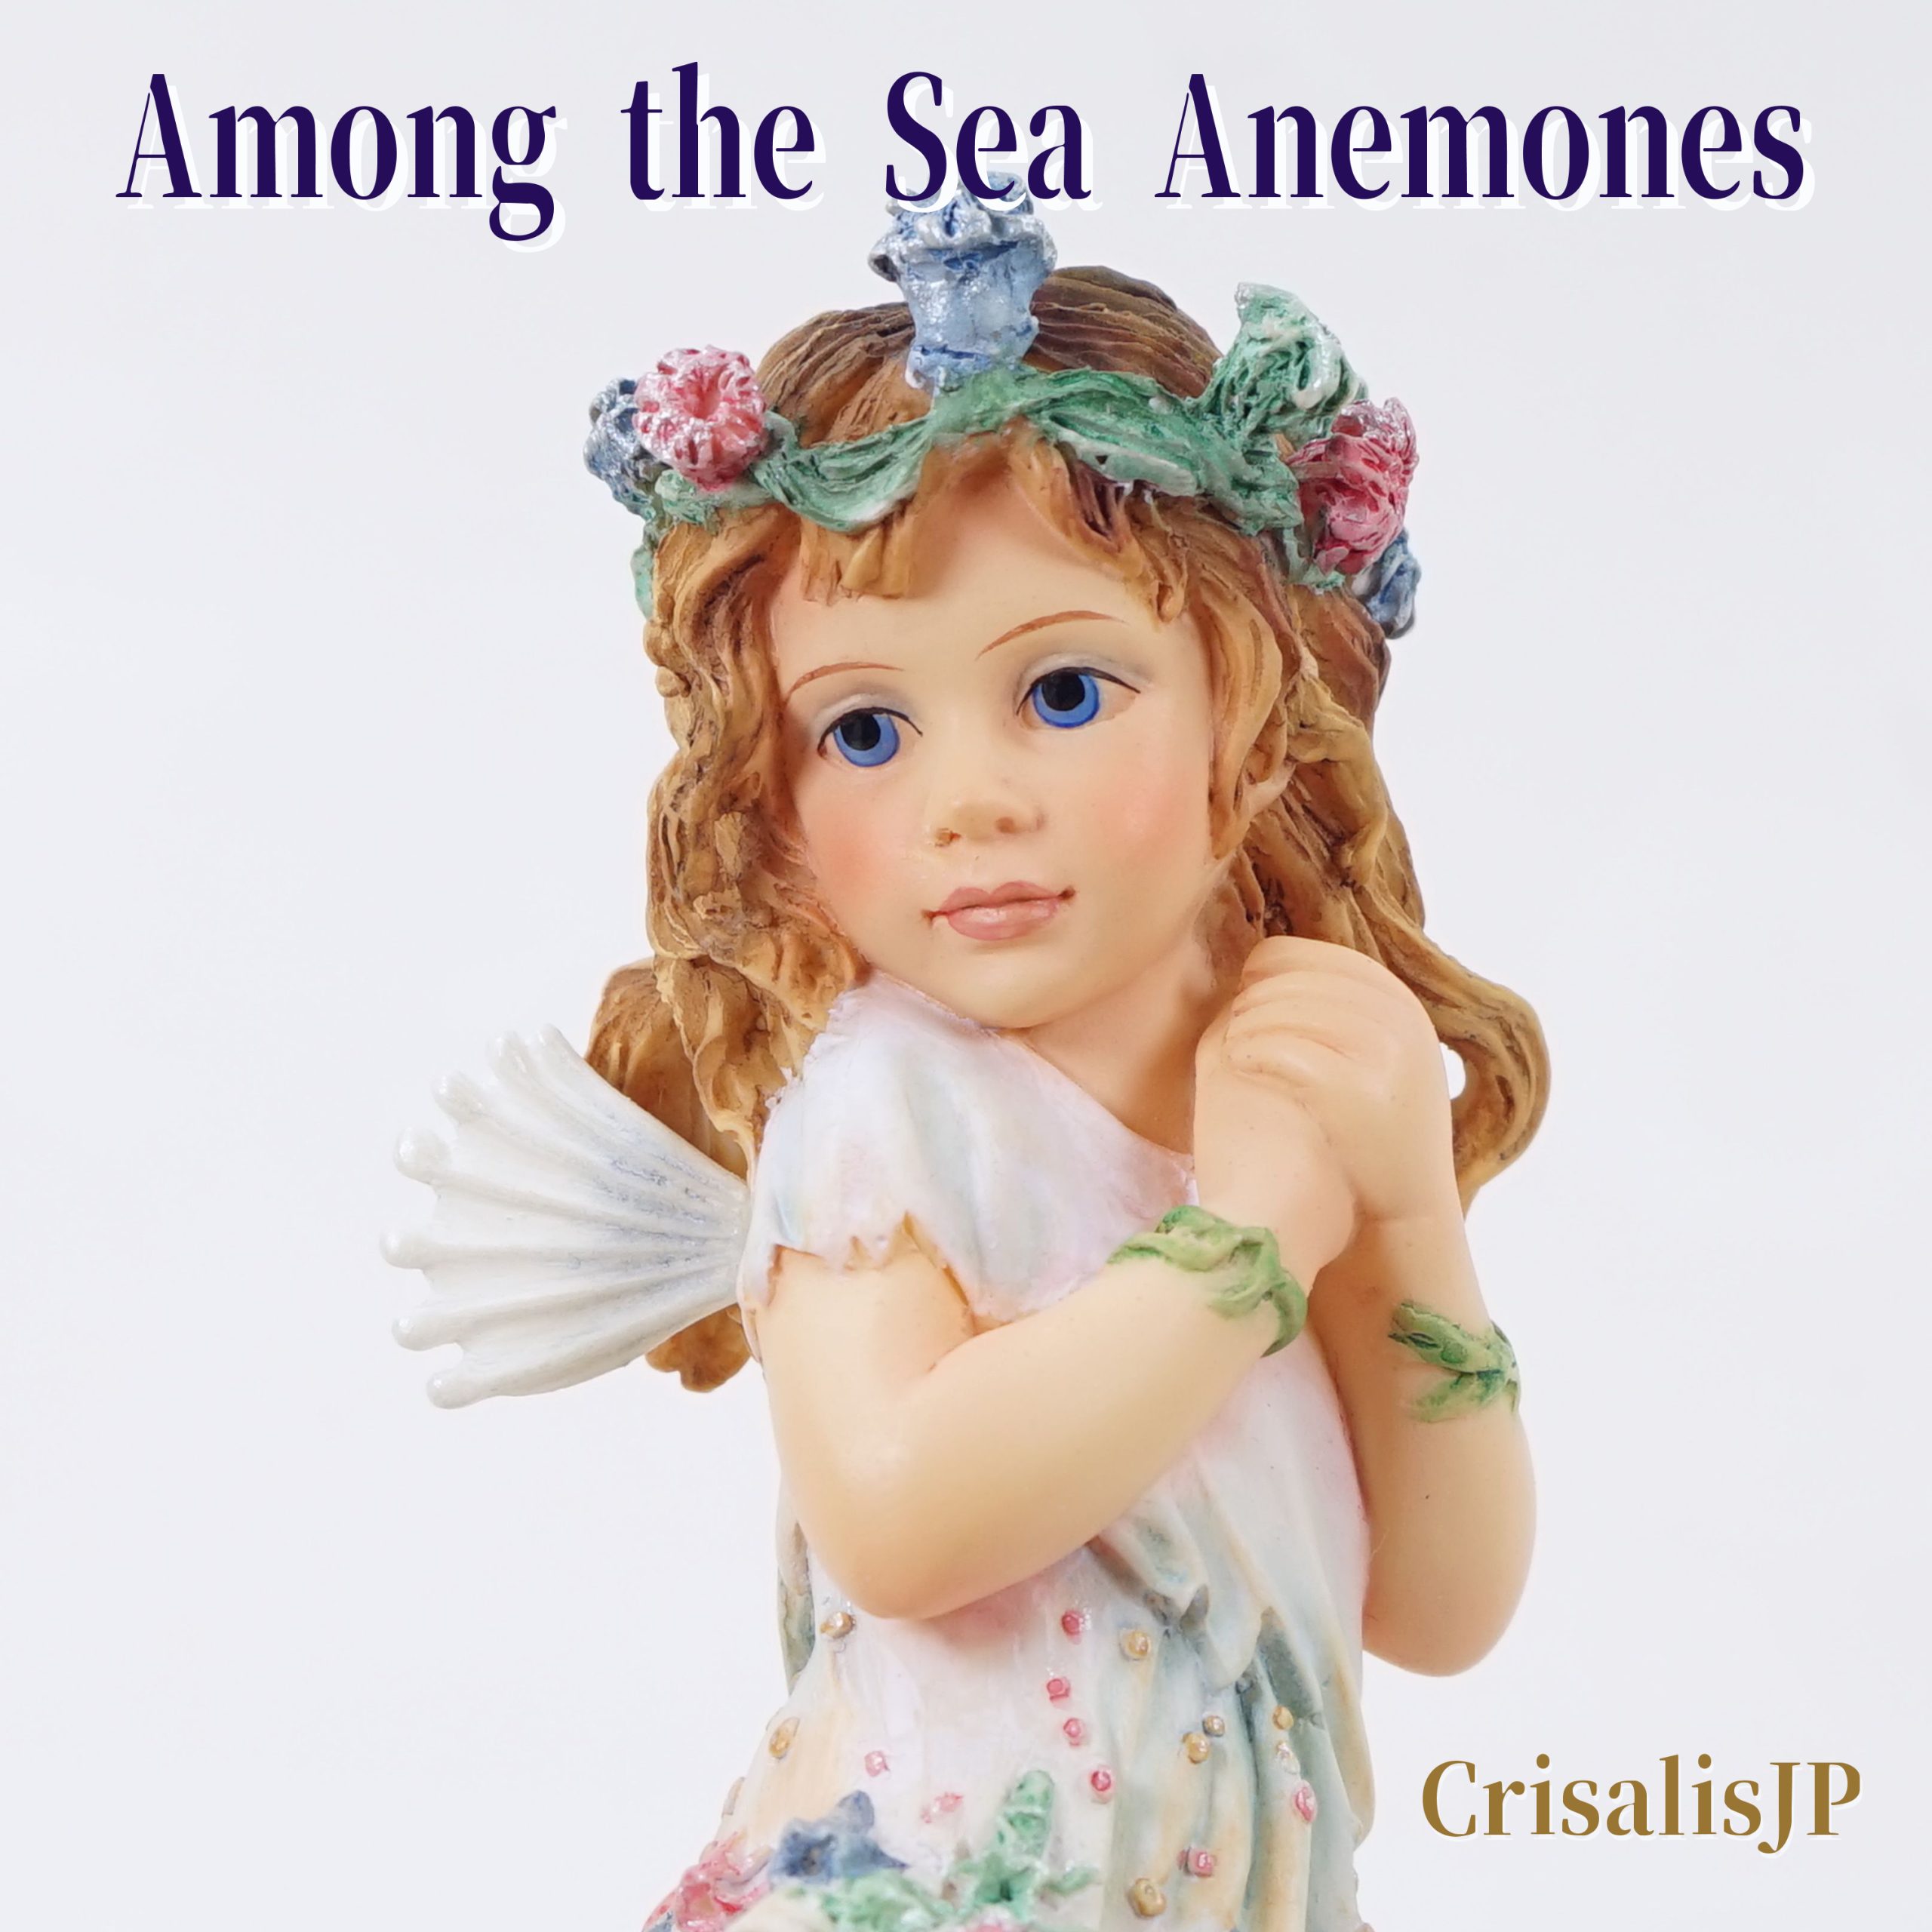 Among the Sea Anemones